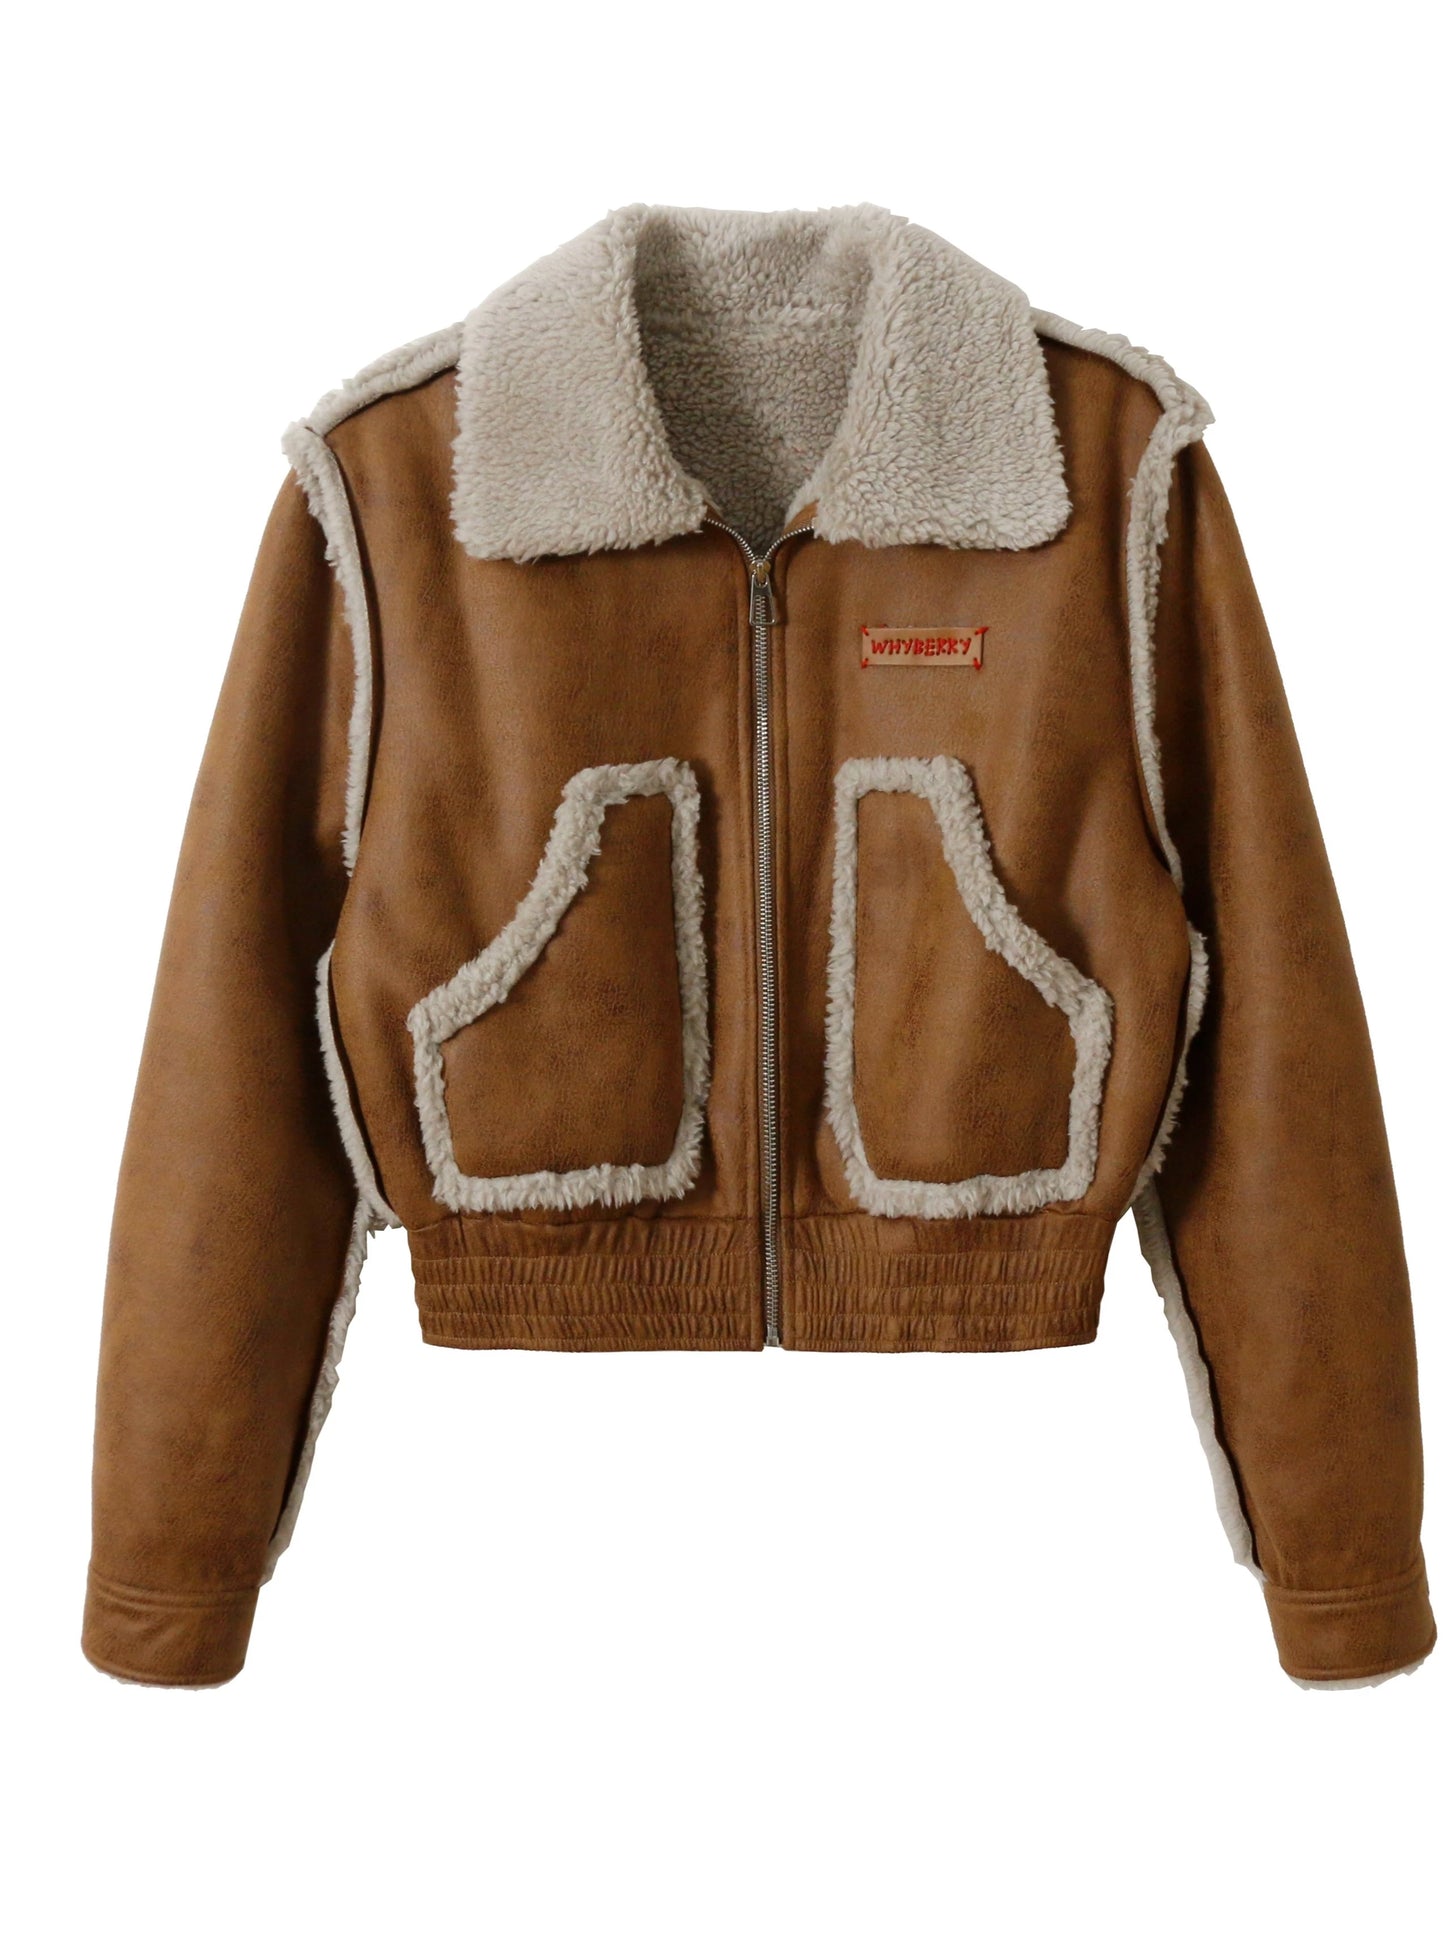 American Leather Retro Jacket